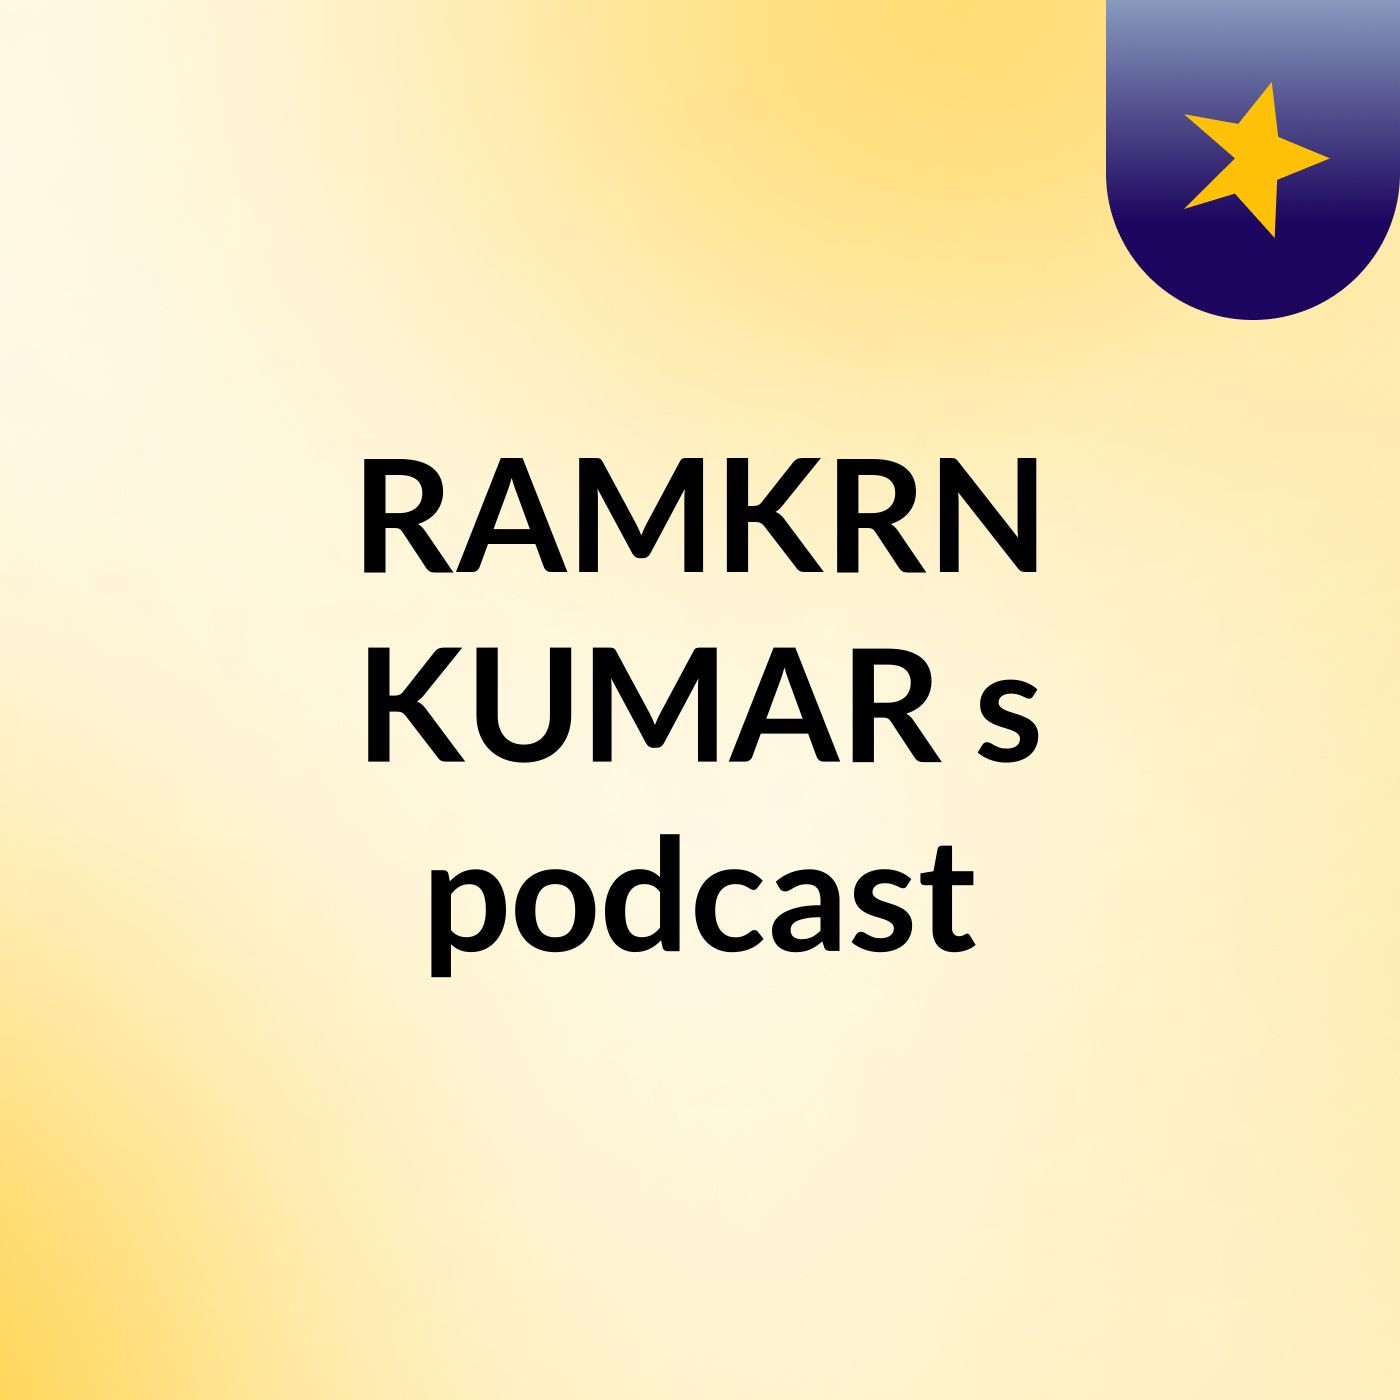 RAMKRN KUMAR's podcast